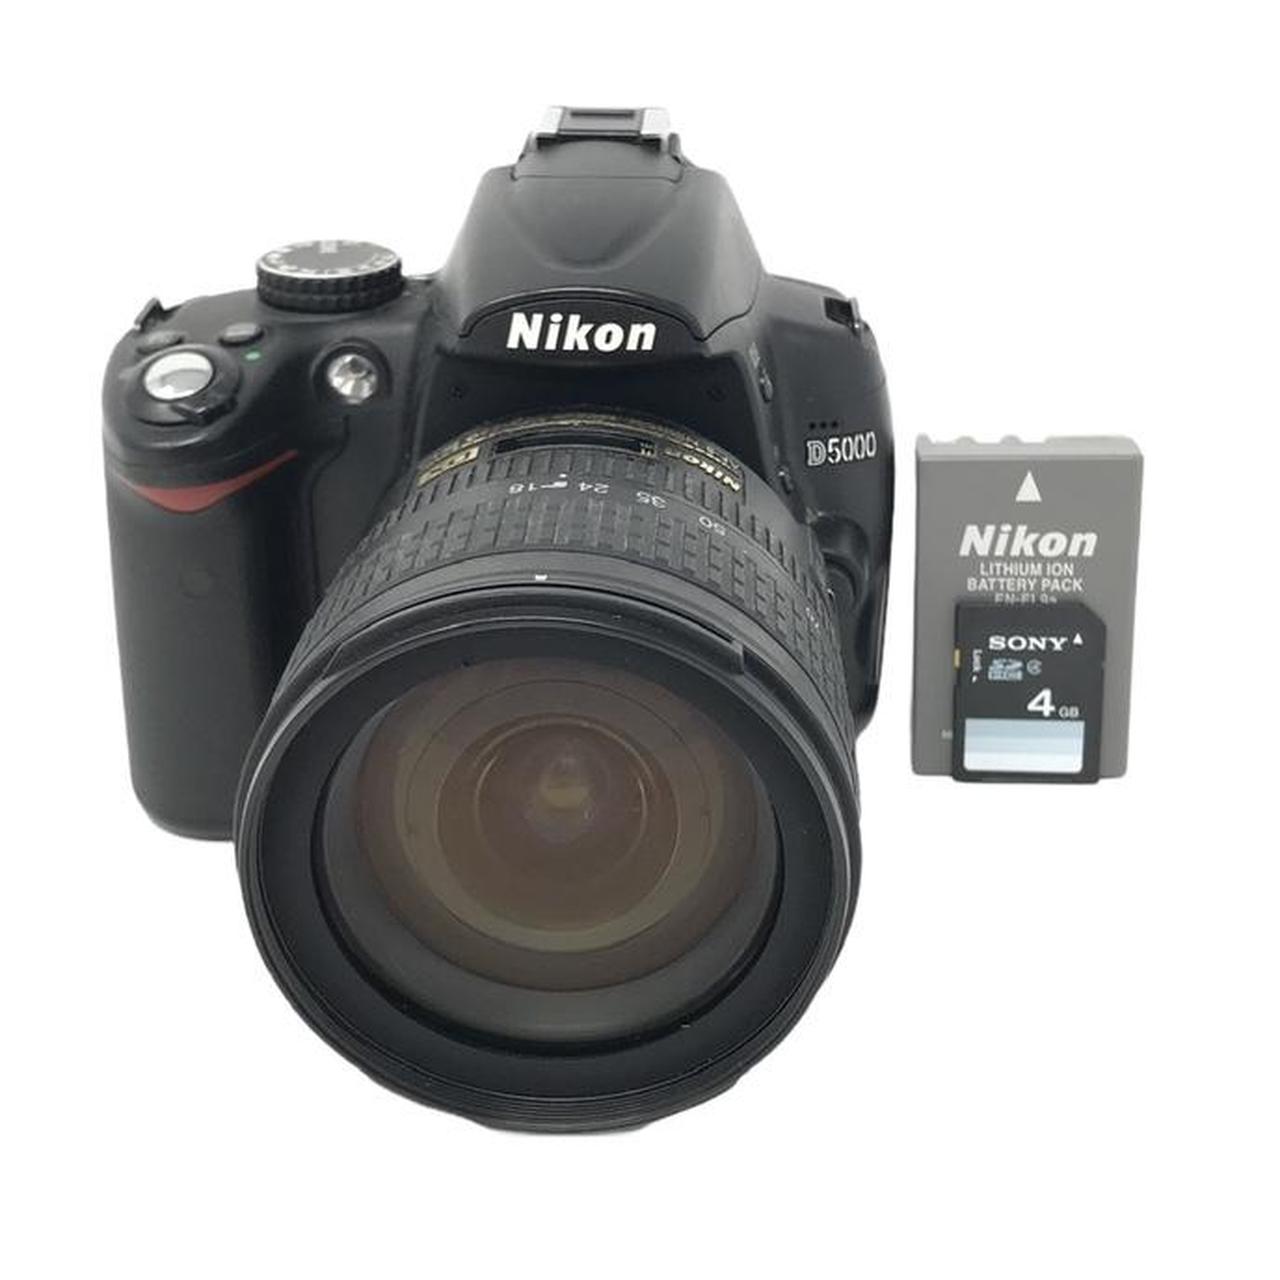 Product Image 1 - Nikon D5000 Digital Camera DSLR

Comes